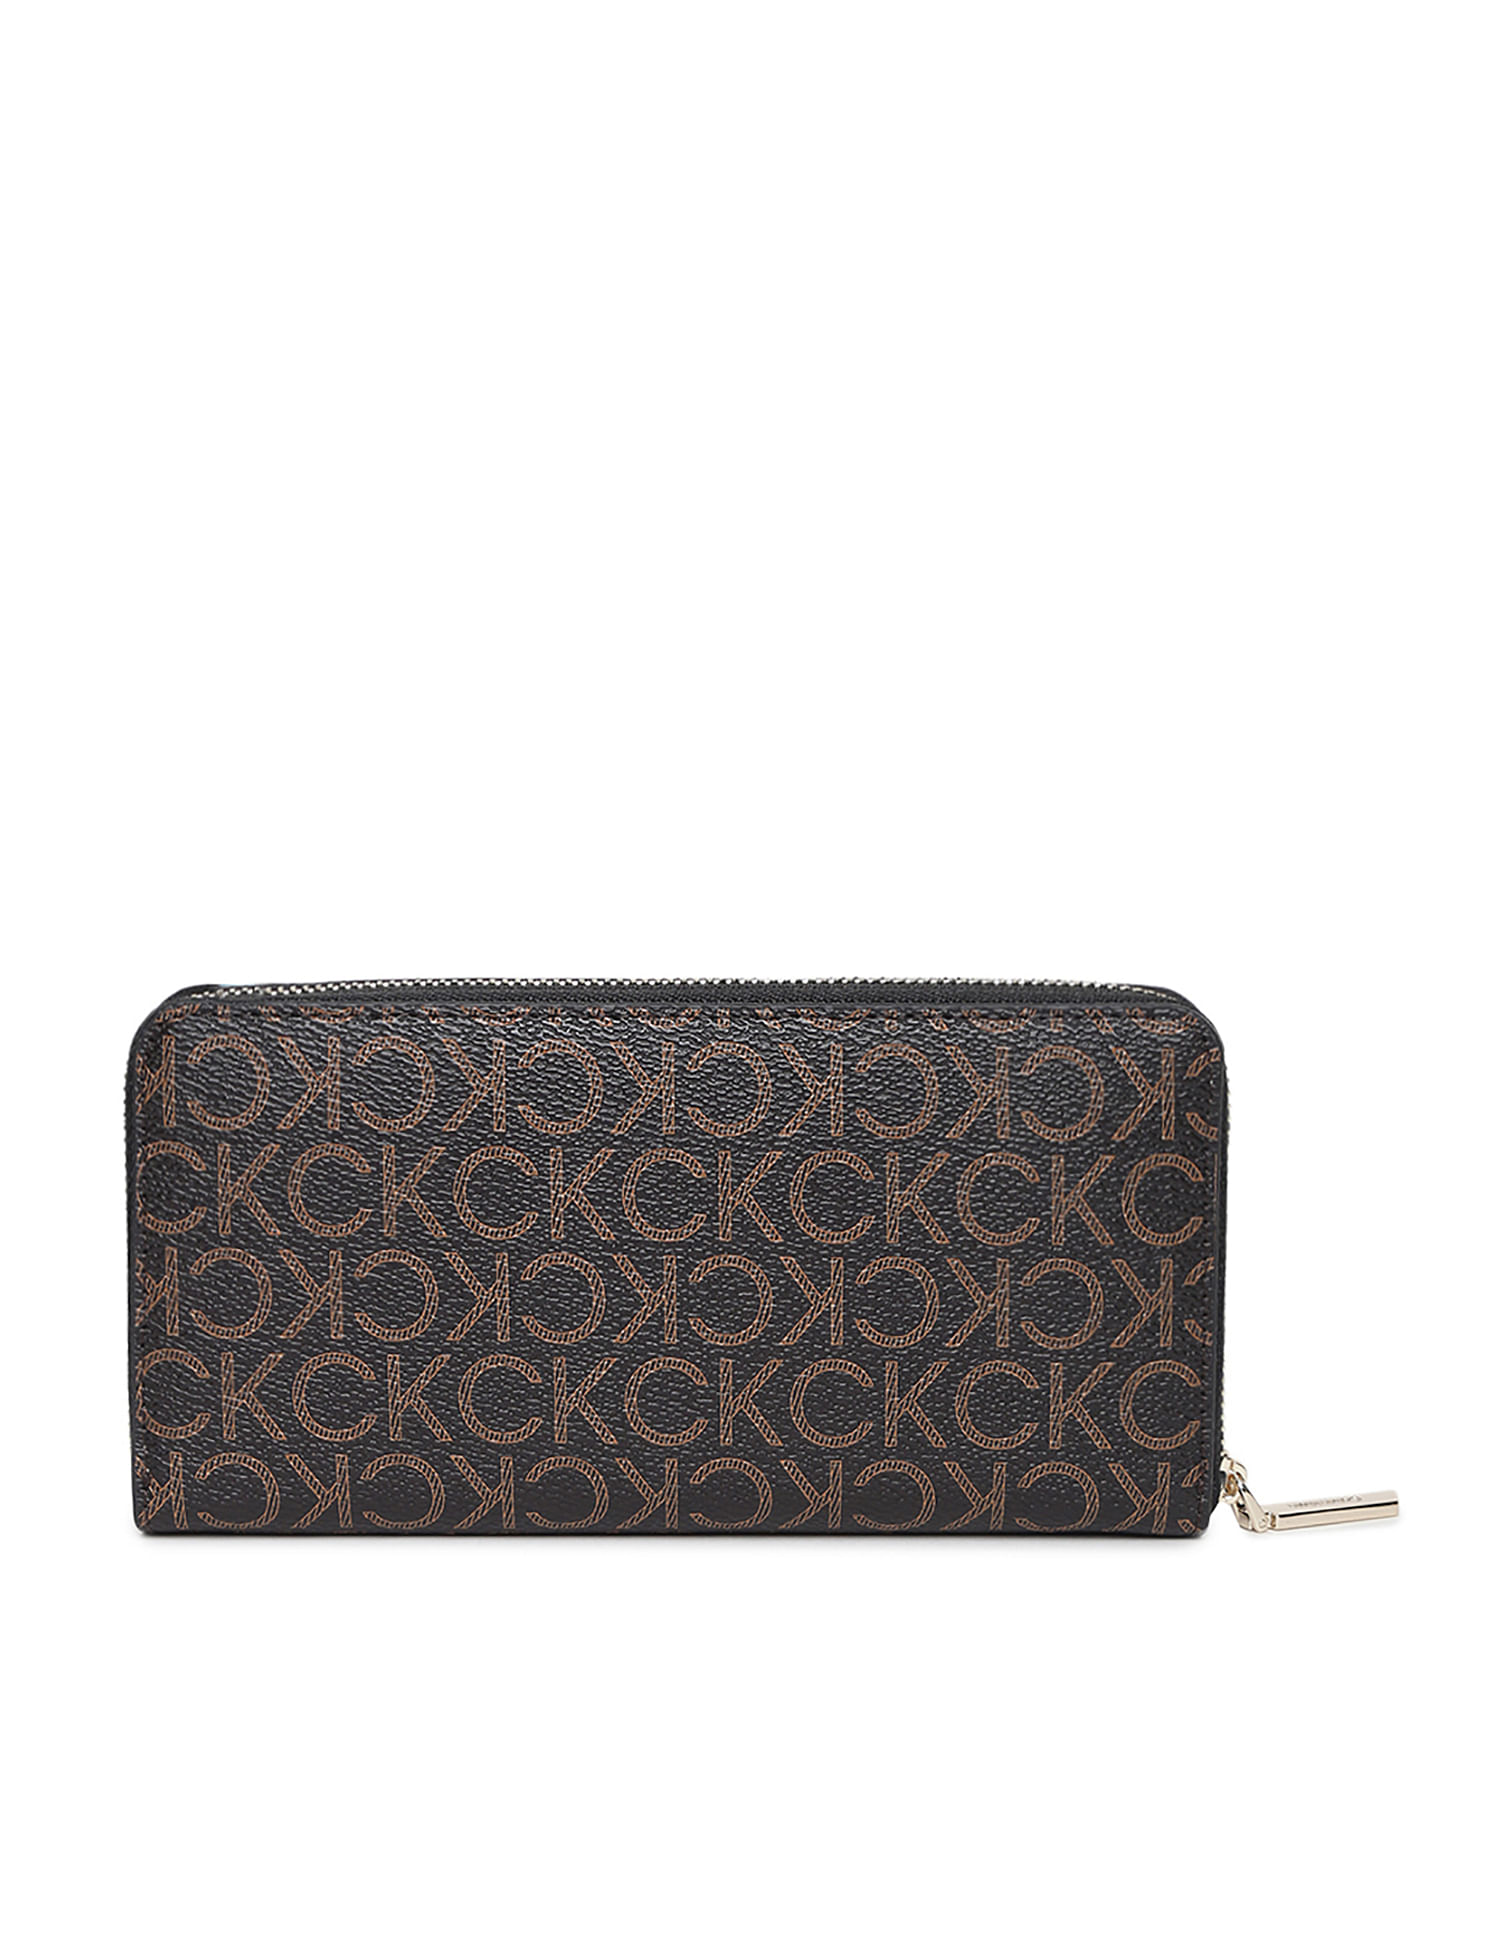 Calvin Klein Zip Around Wallet | Buy bags, purses & accessories online |  modeherz